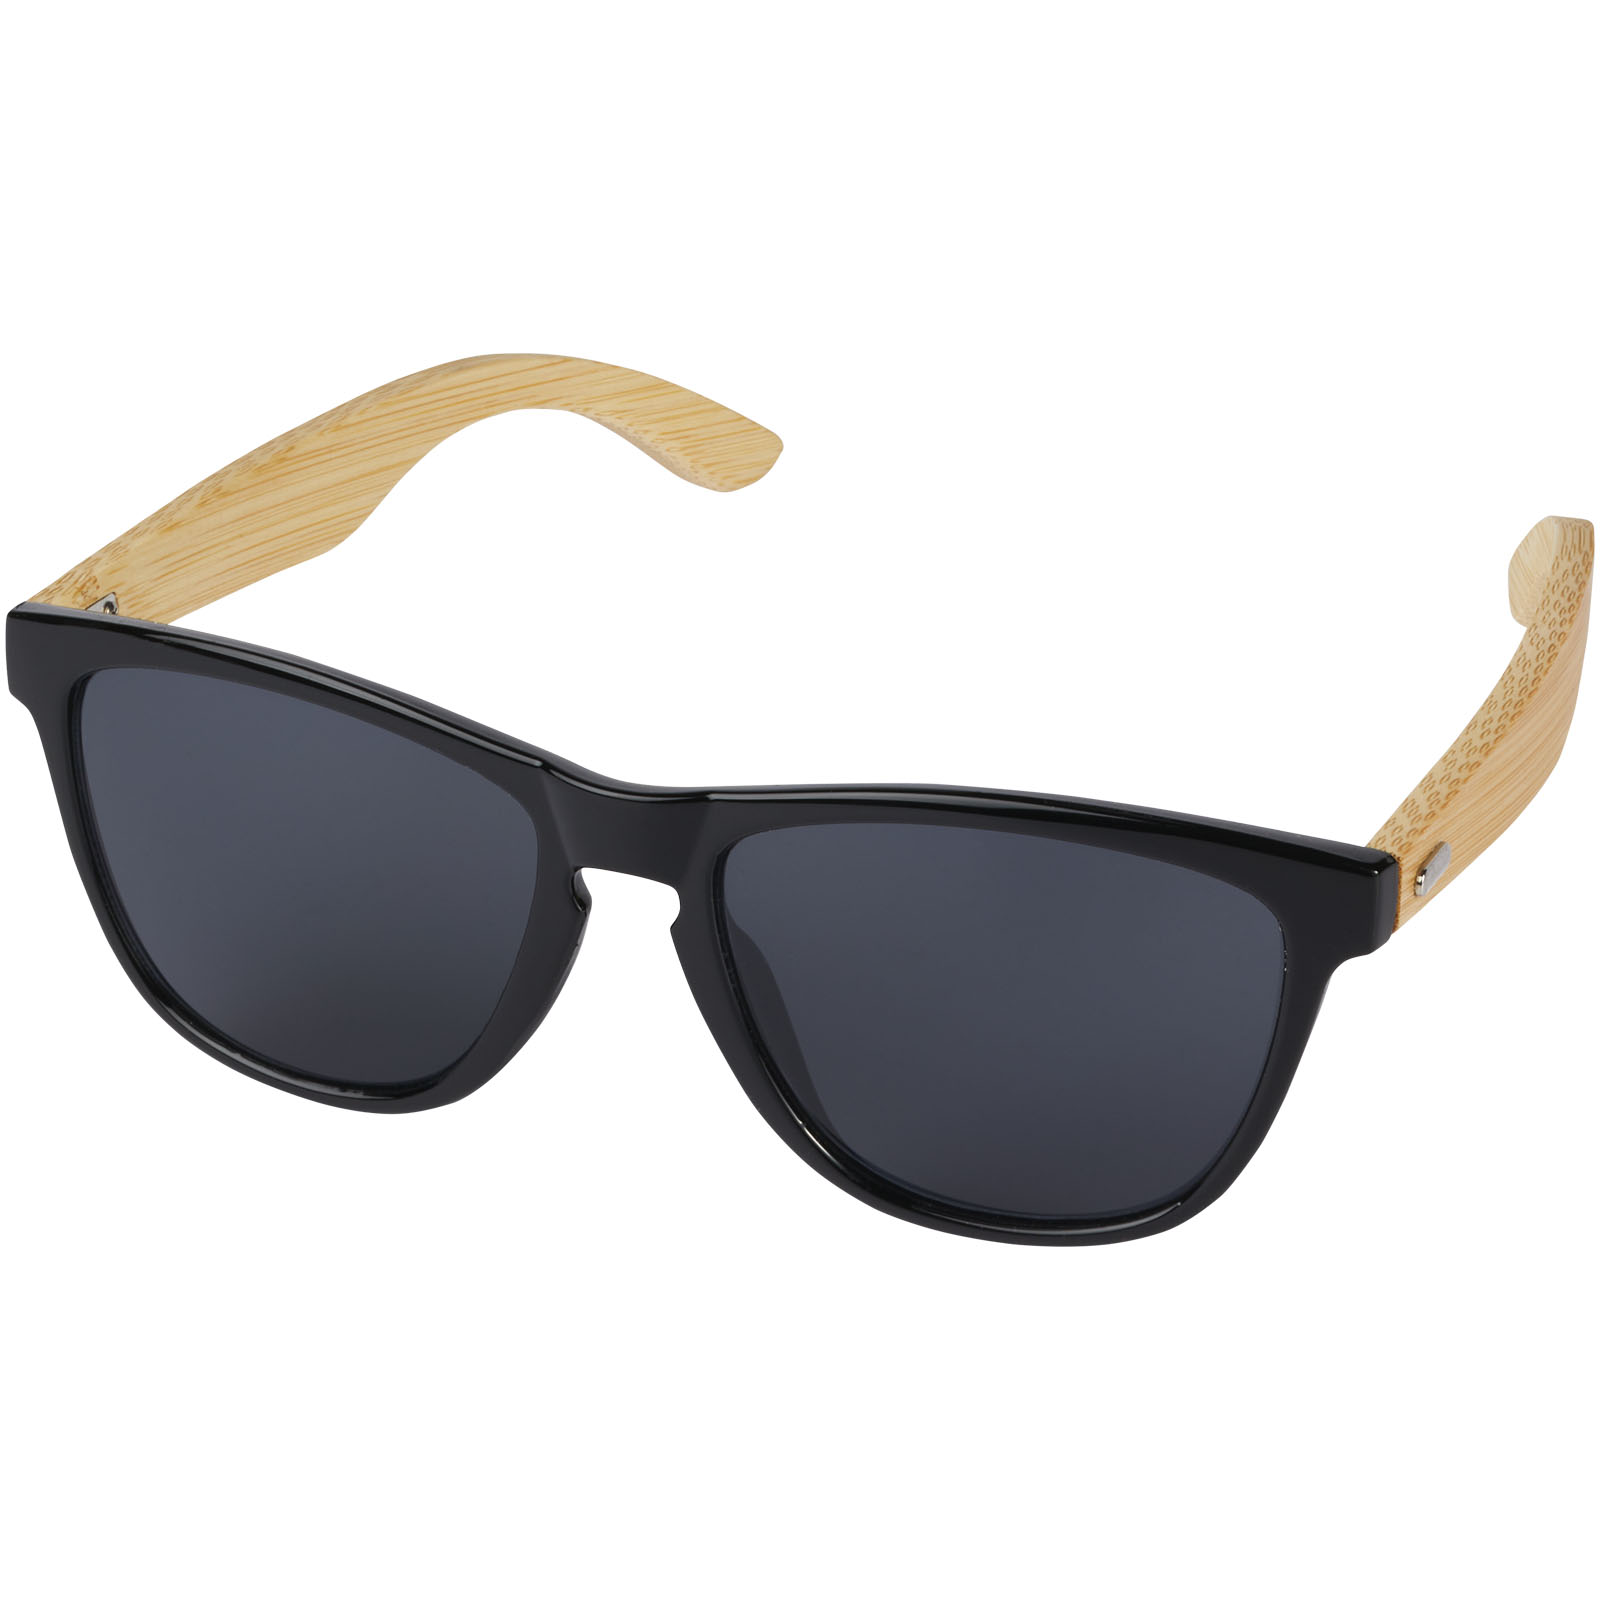 Advertising Sunglasses - Sun Ray ocean bound plastic and bamboo sunglasses - 0